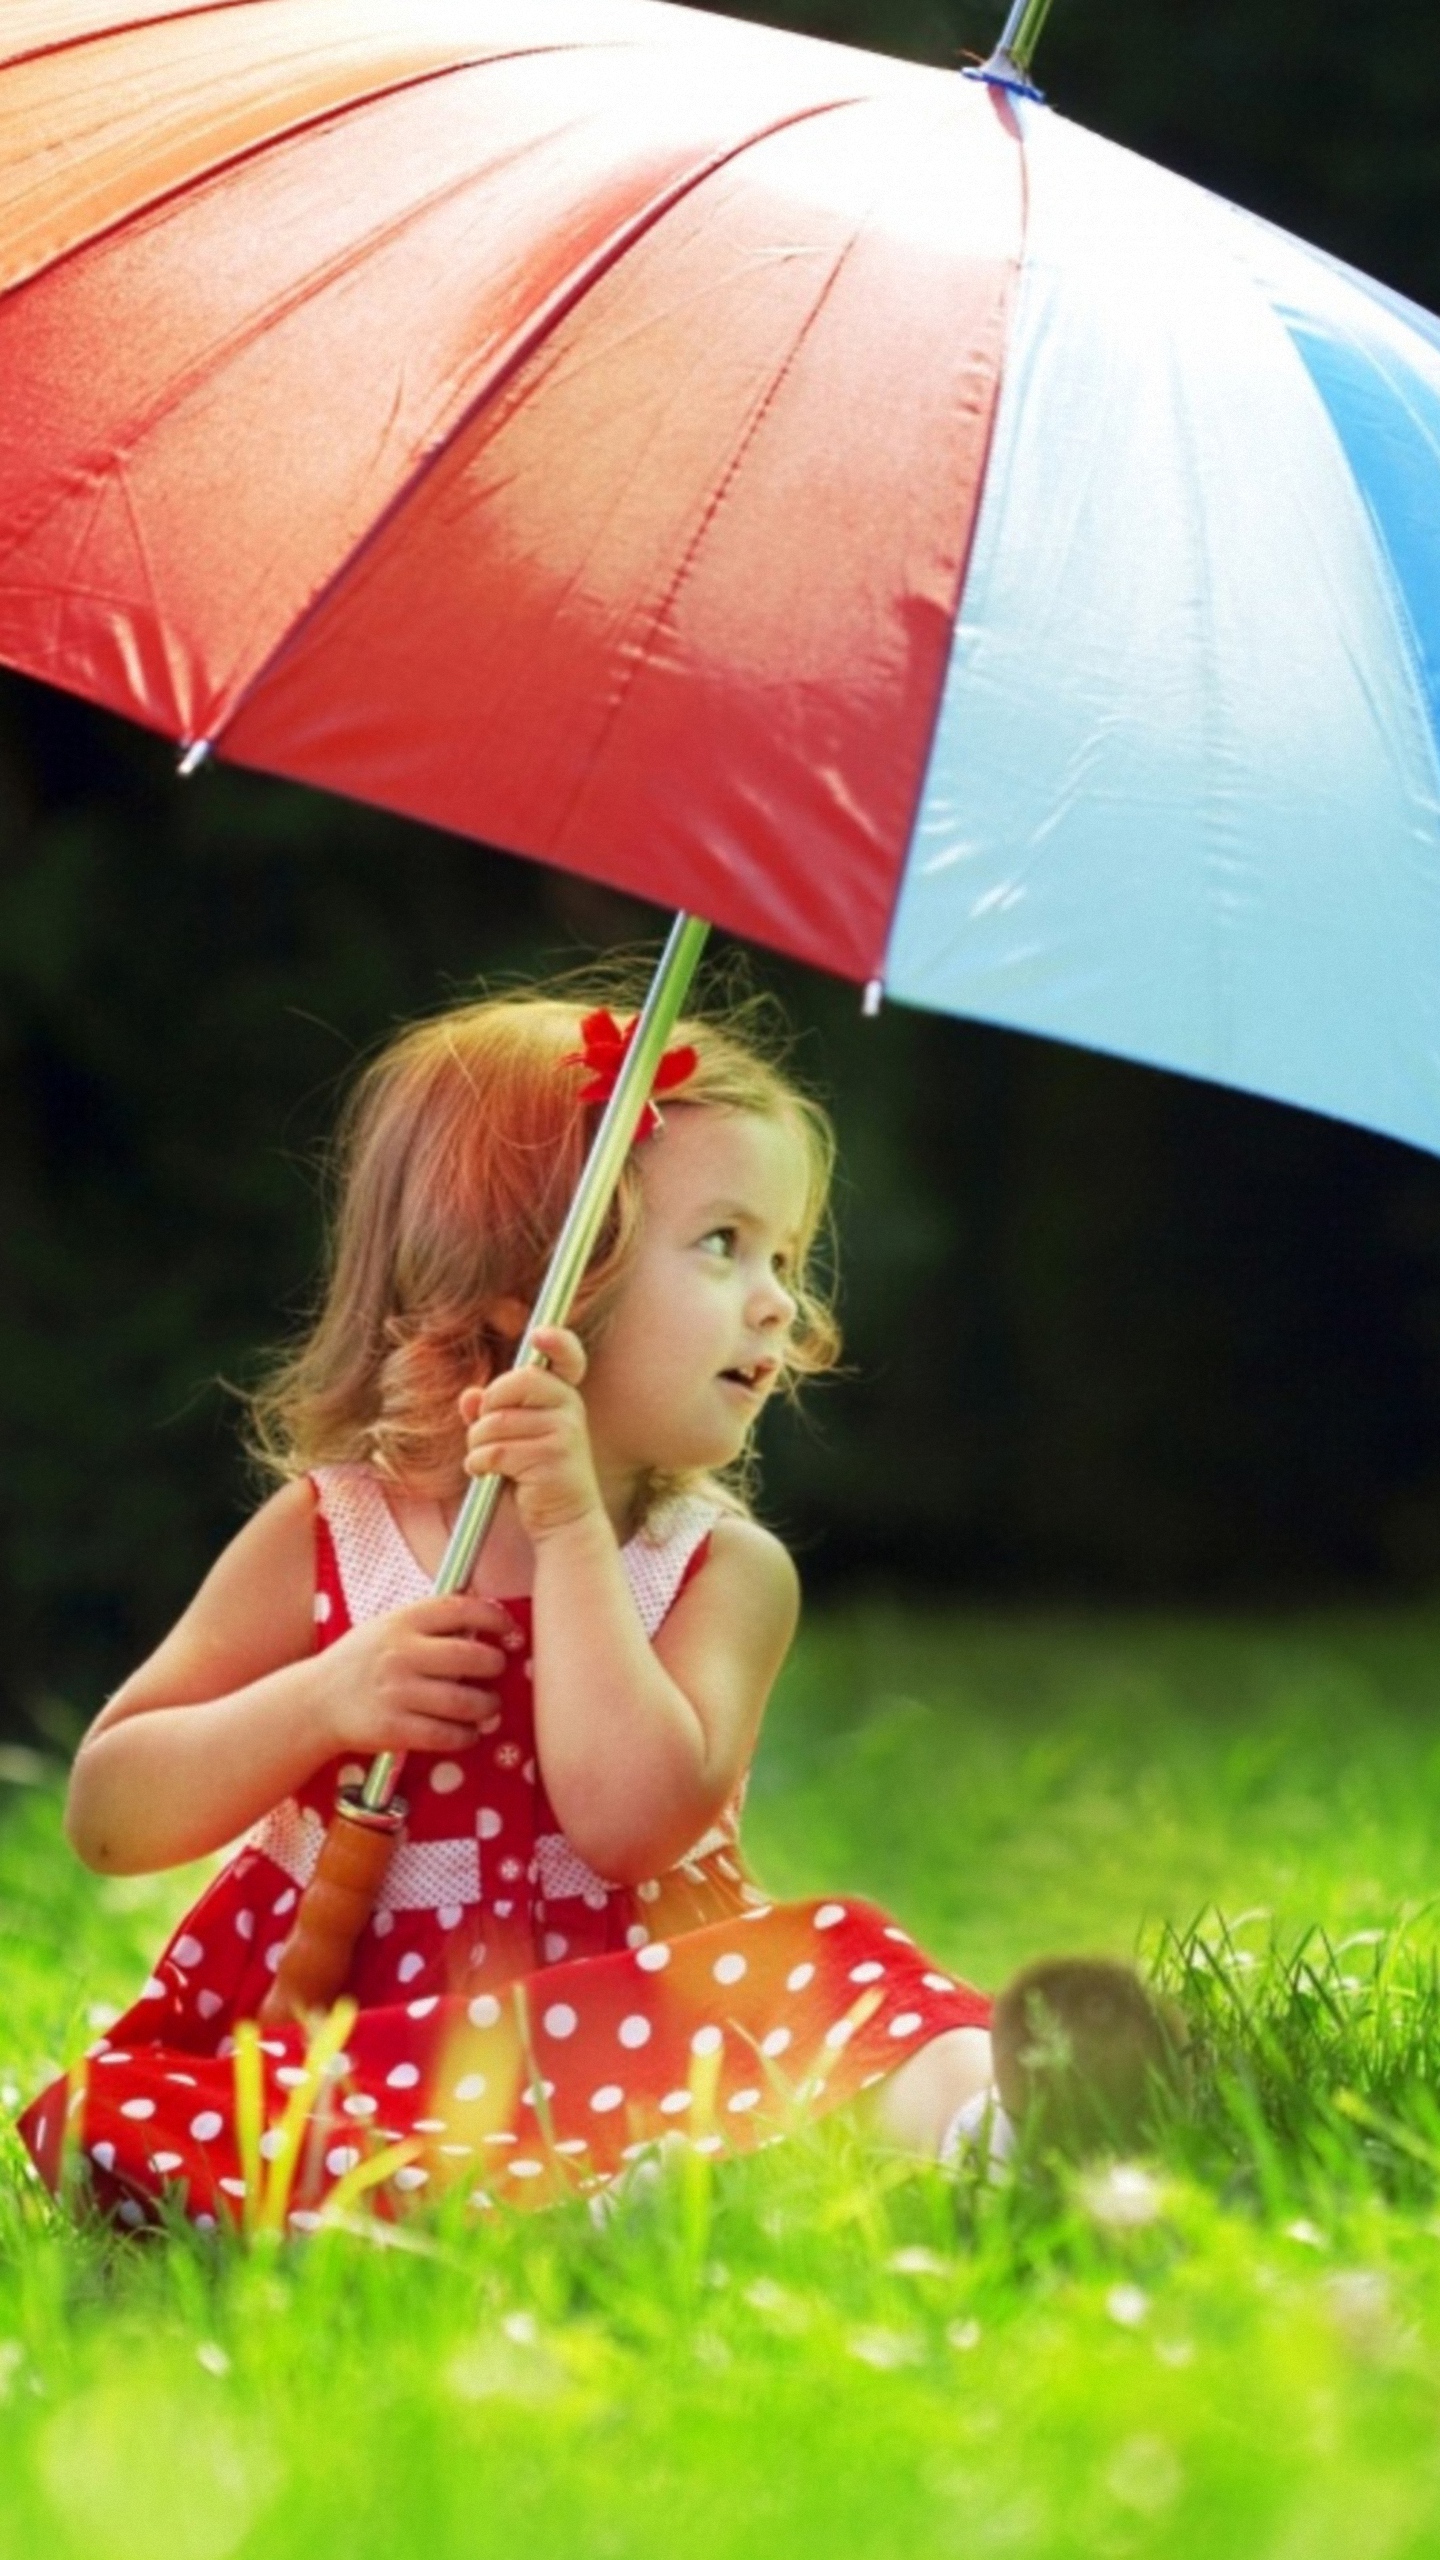 Cute Girl And Umbrella lg g3 Wallpapers HD 1440x2560